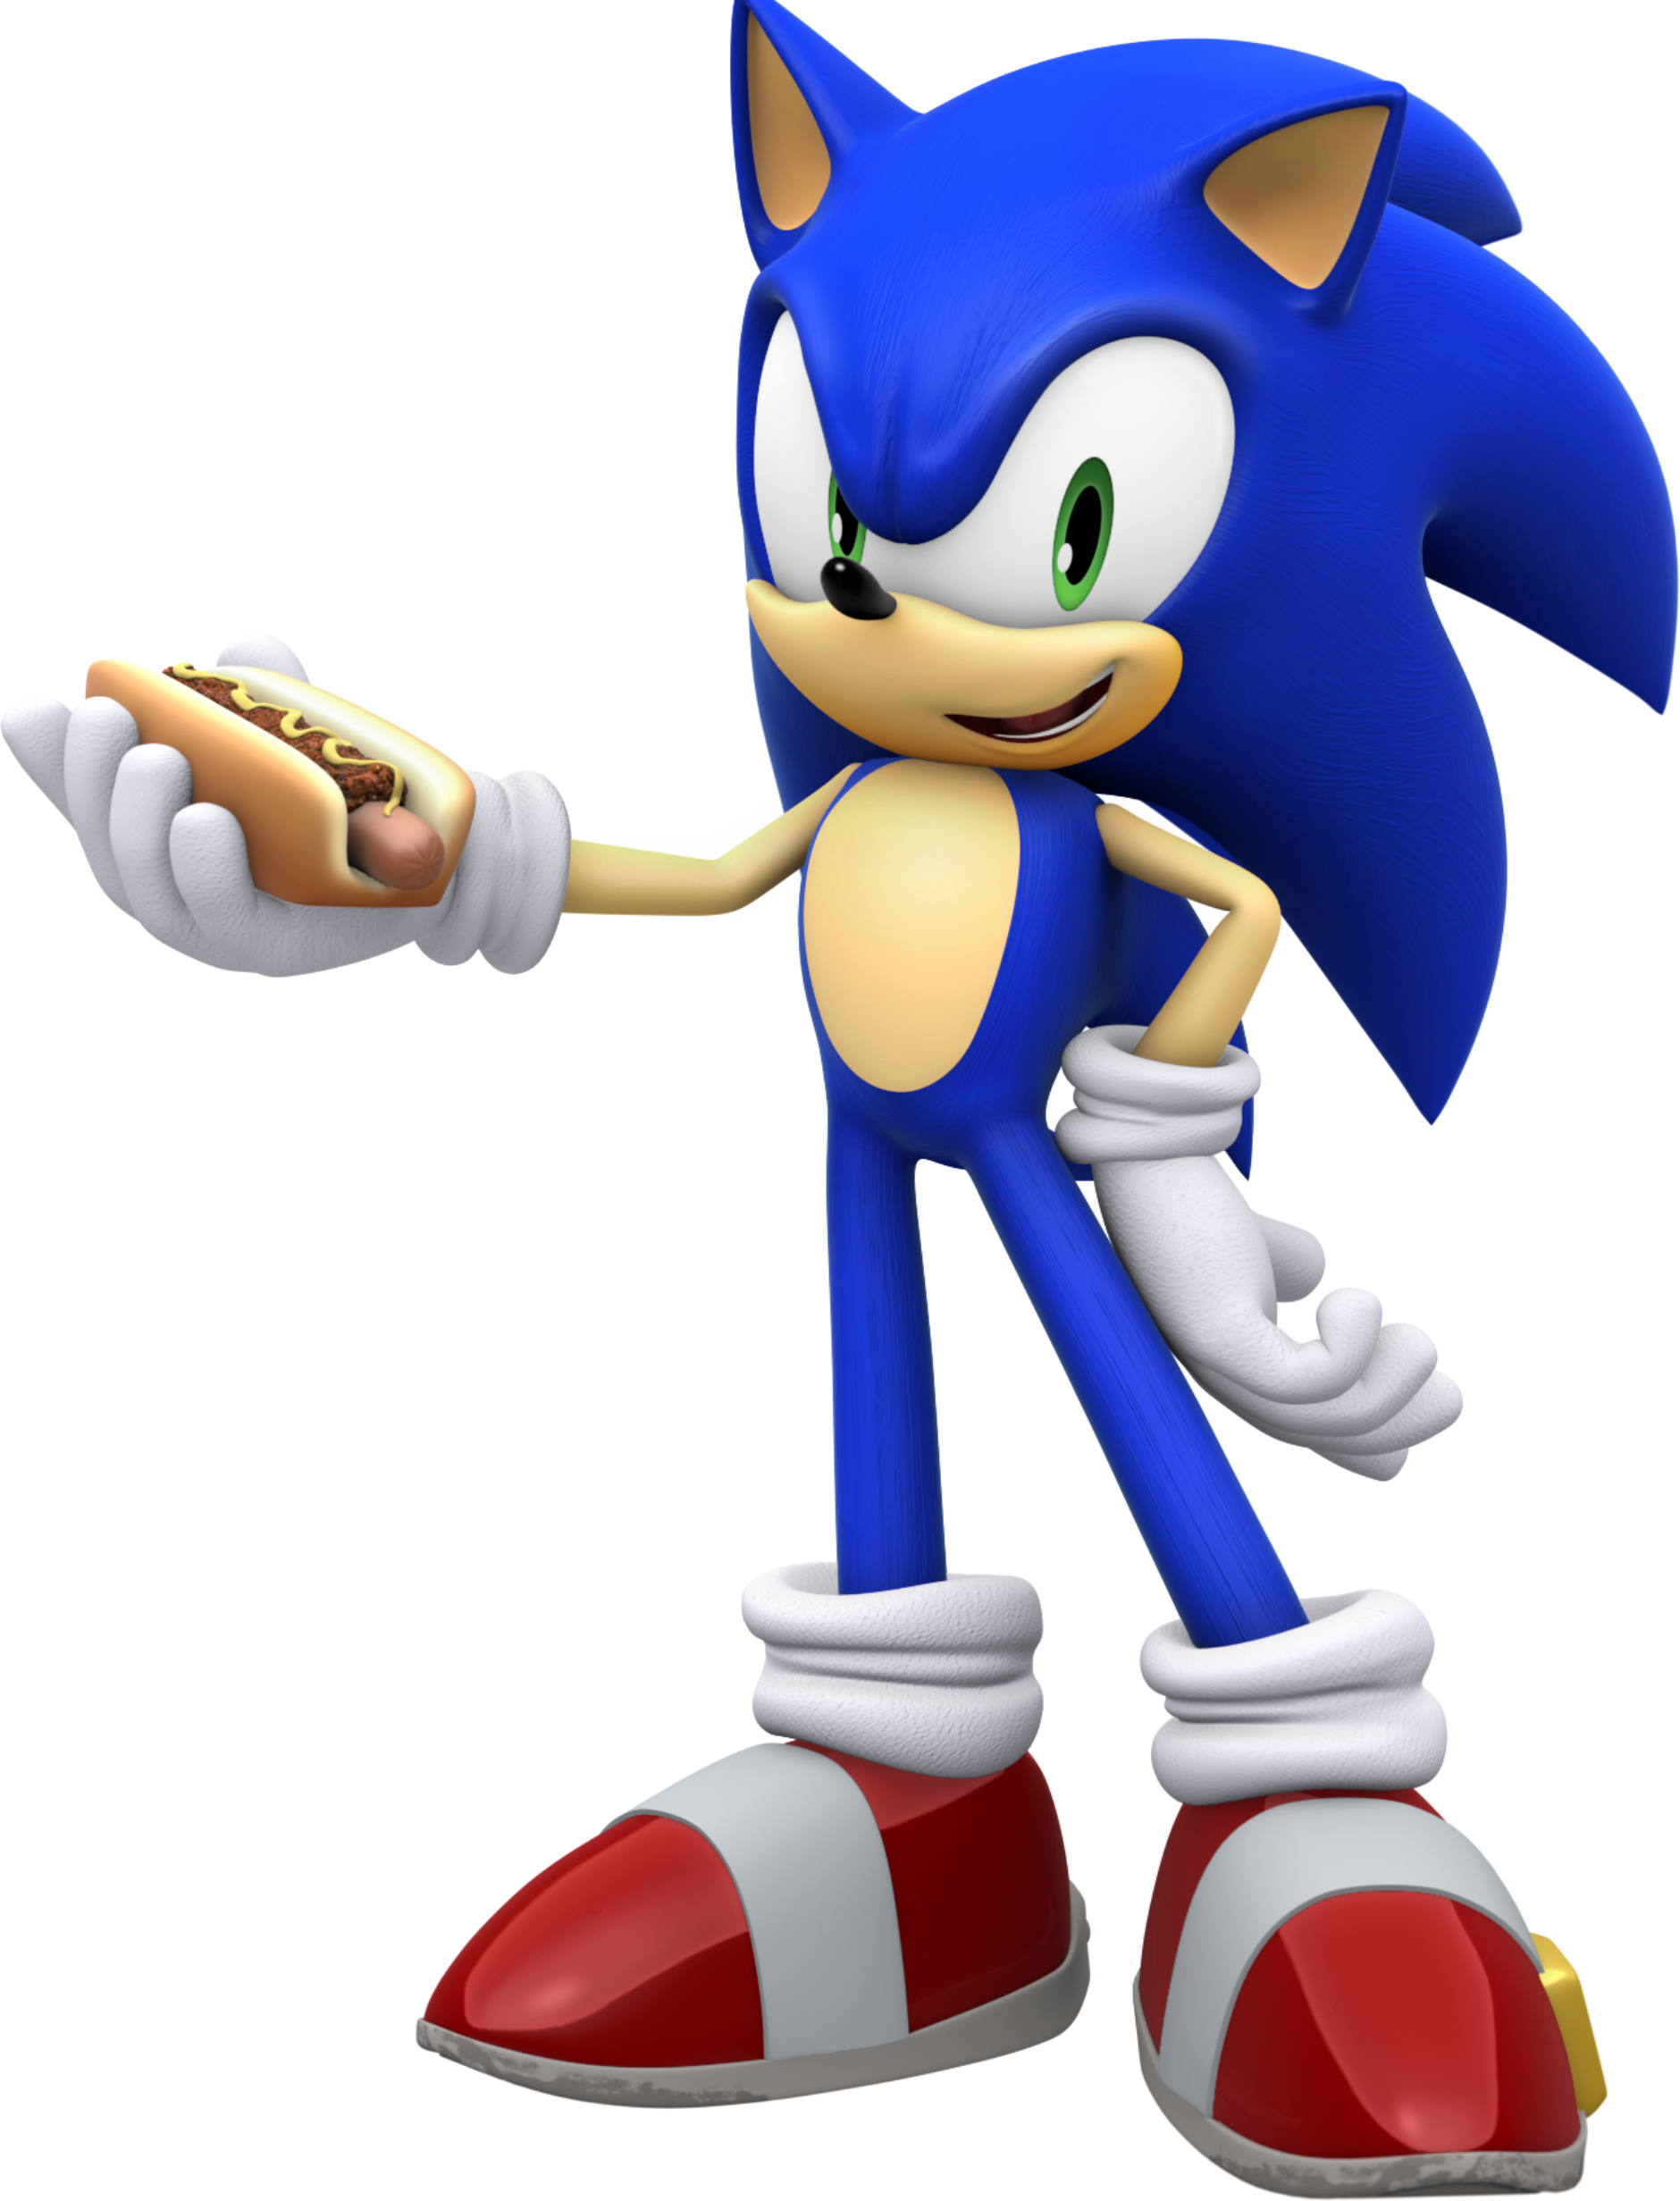 Sonic the Hedgehog transparent image download, size: 1880x2463px